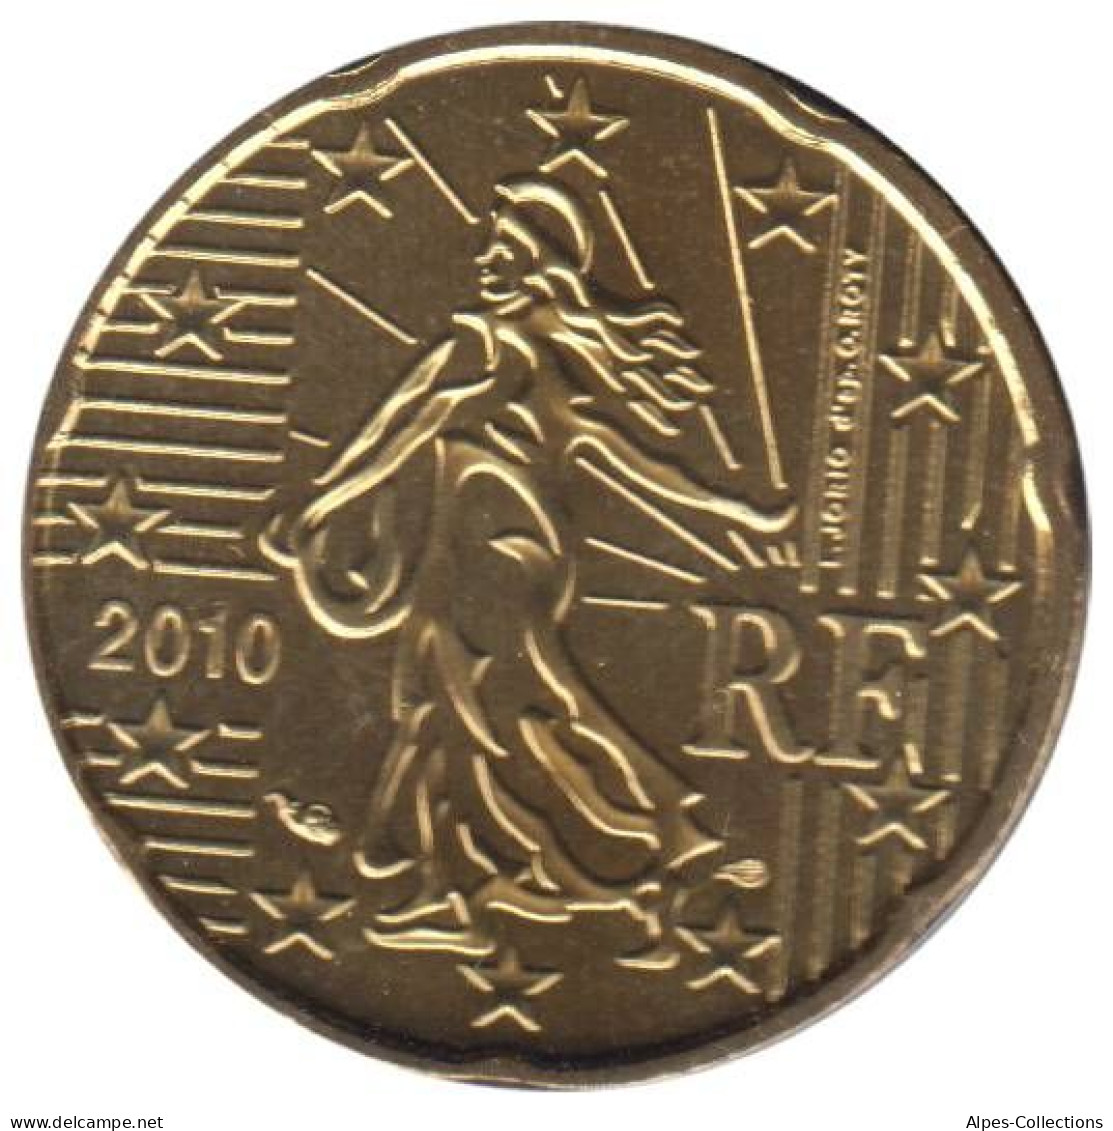 FR02010.2 - FRANCE - 20 Cents - 2010 - BU - France